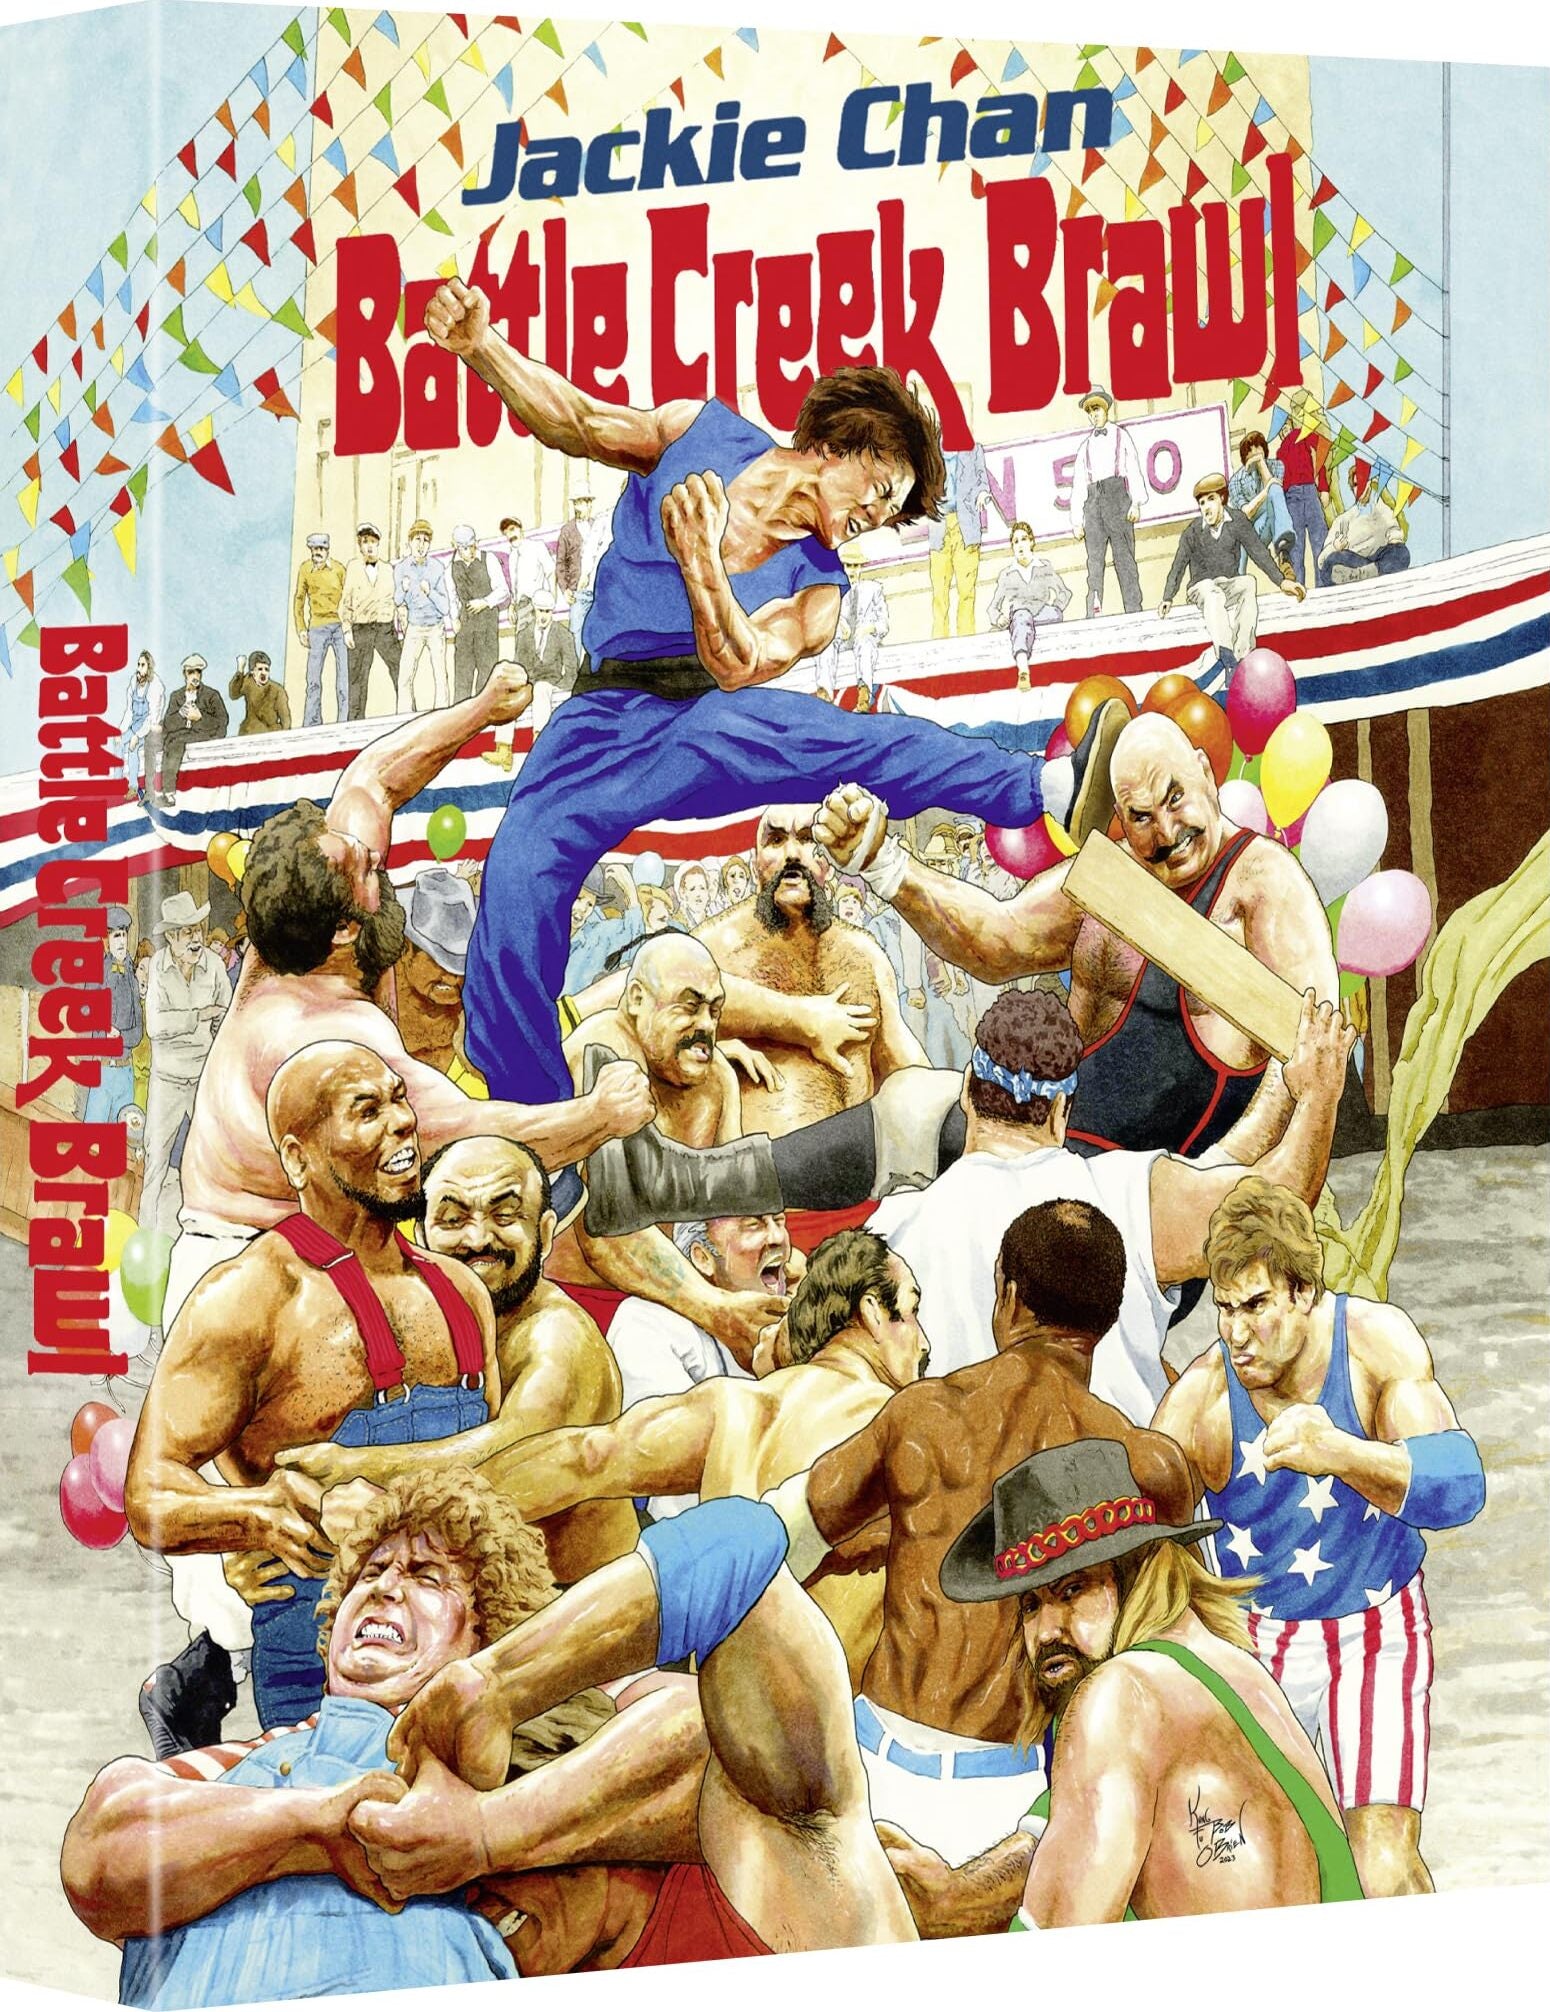 BATTLE CREEK BRAWL (REGION B IMPORT - DELUXE EDITION) BLU-RAY